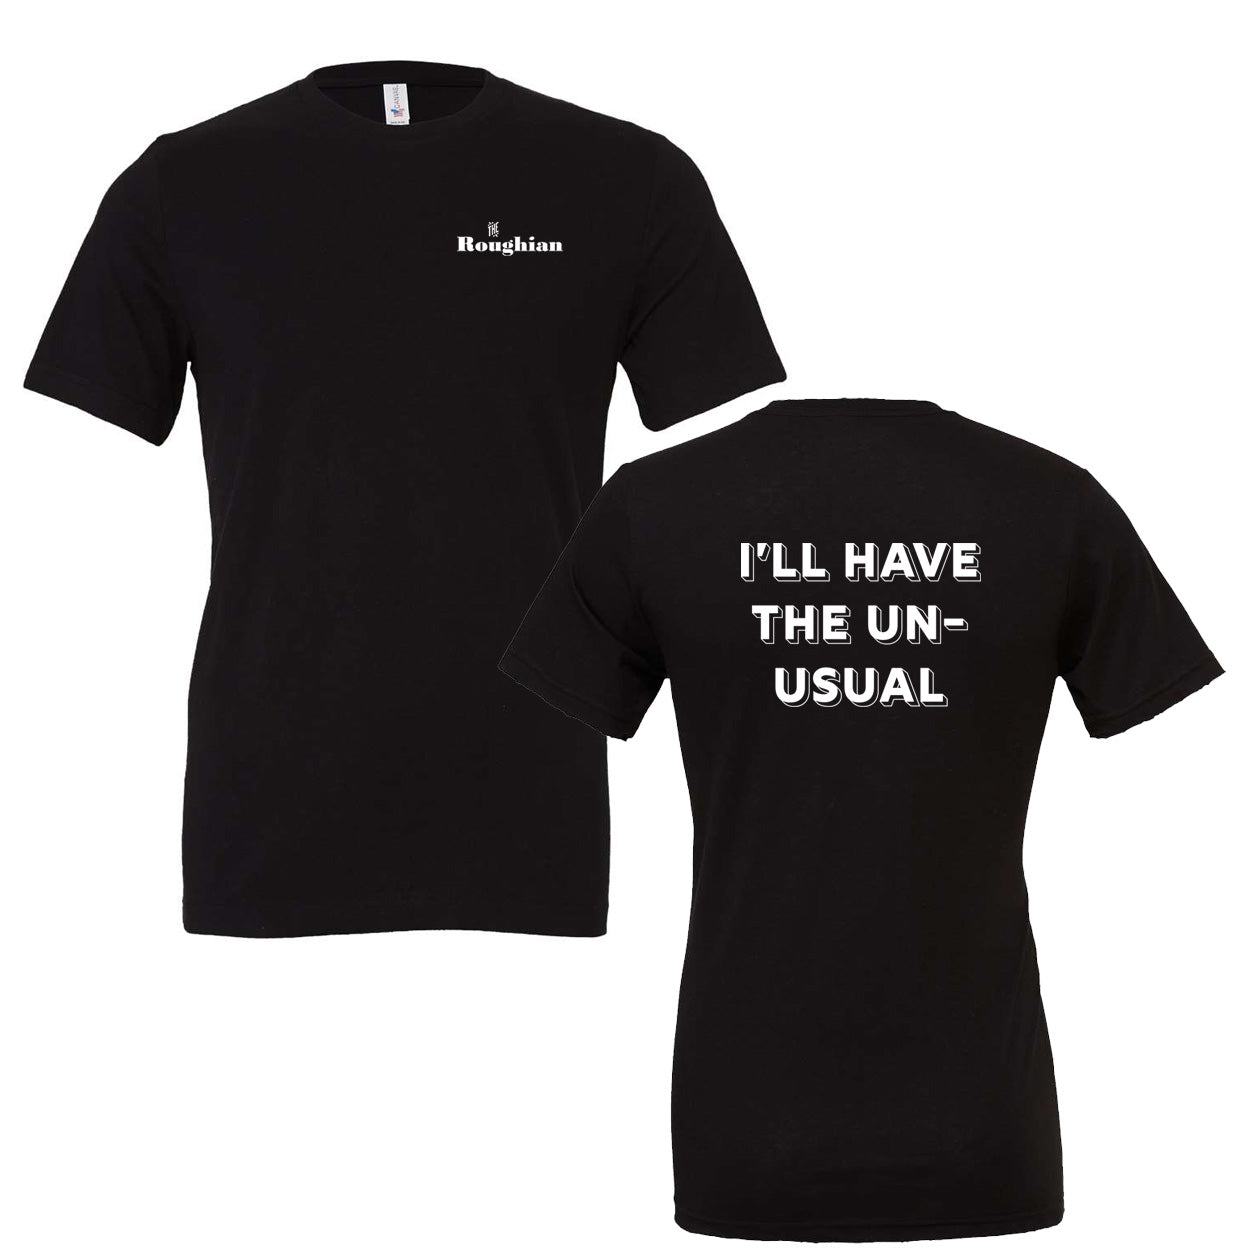 The Roughian T-shirts